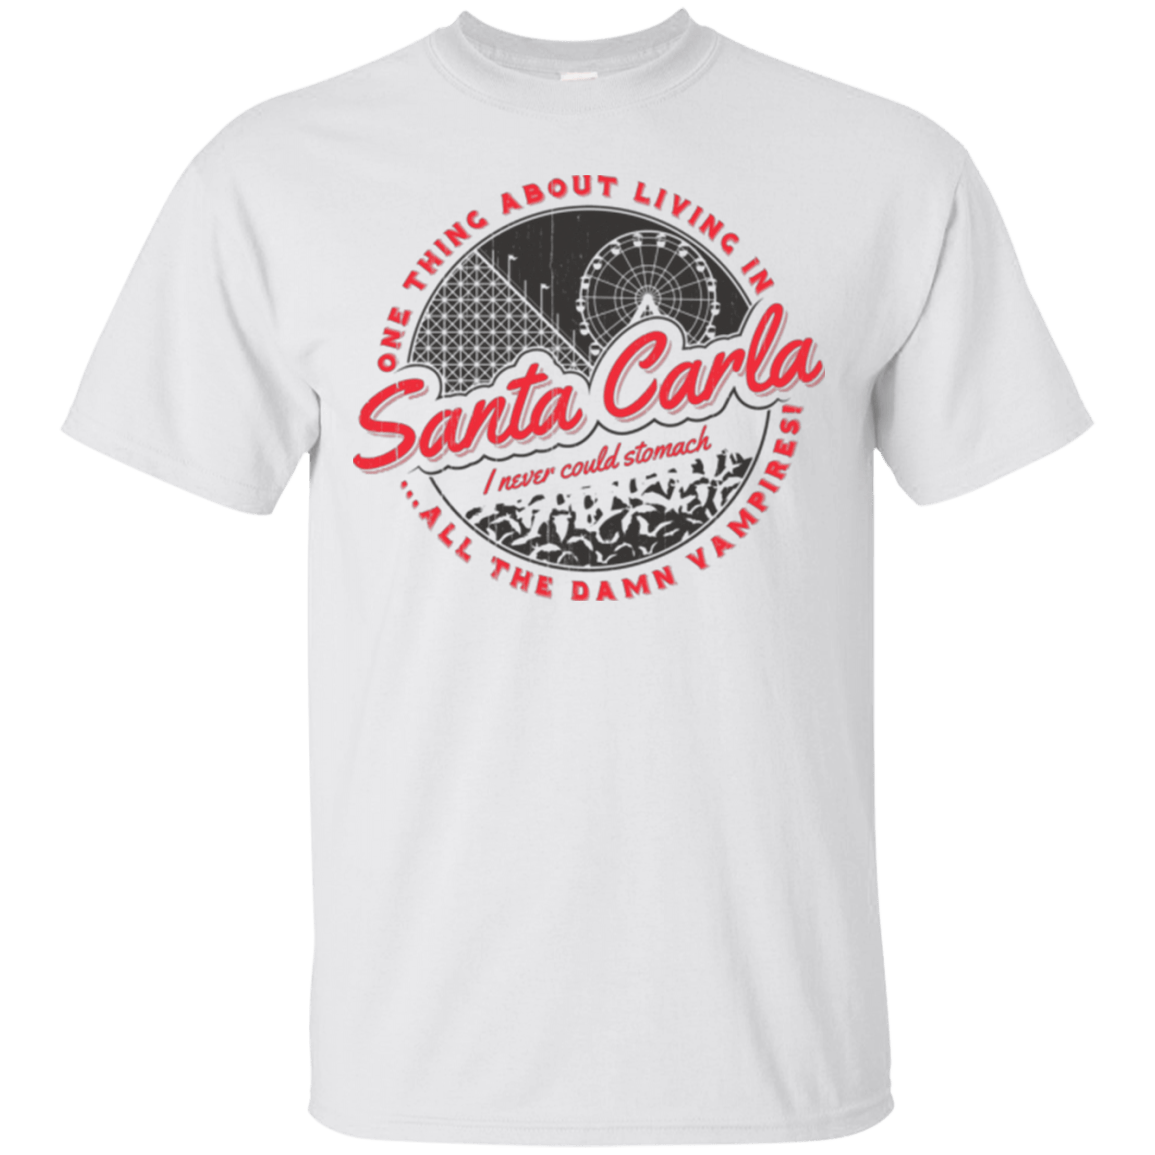 Living in Santa Carla T-Shirt – Pop Up Tee